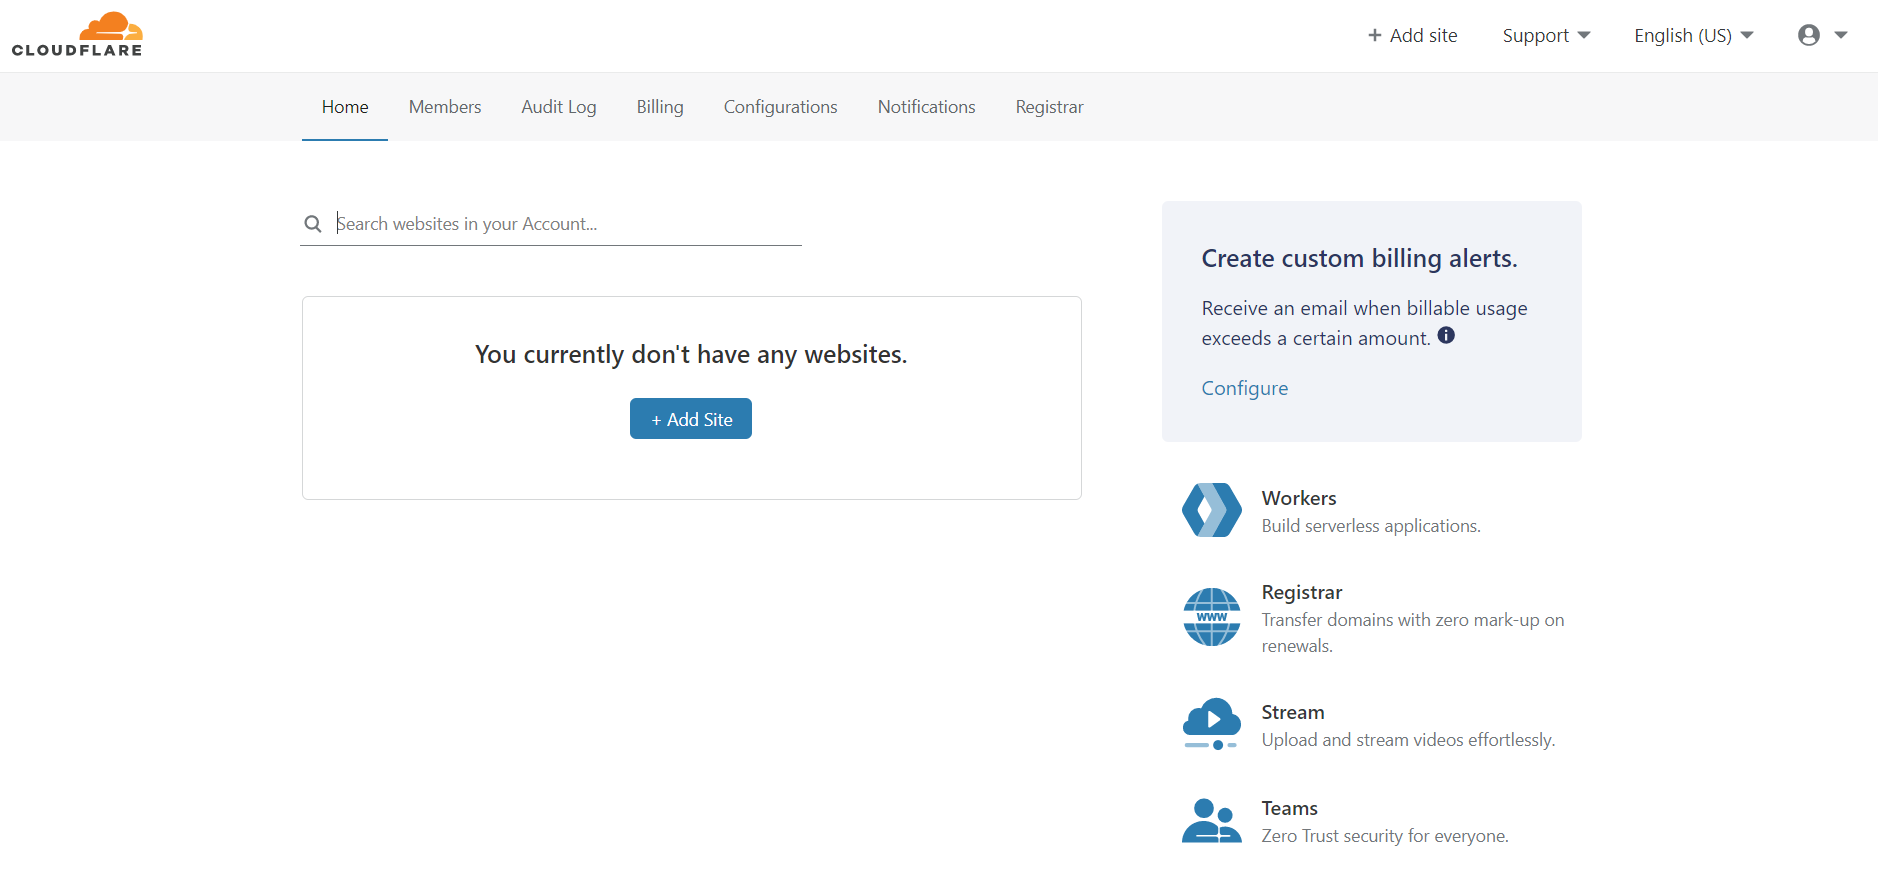 Add a site in Cloudflare